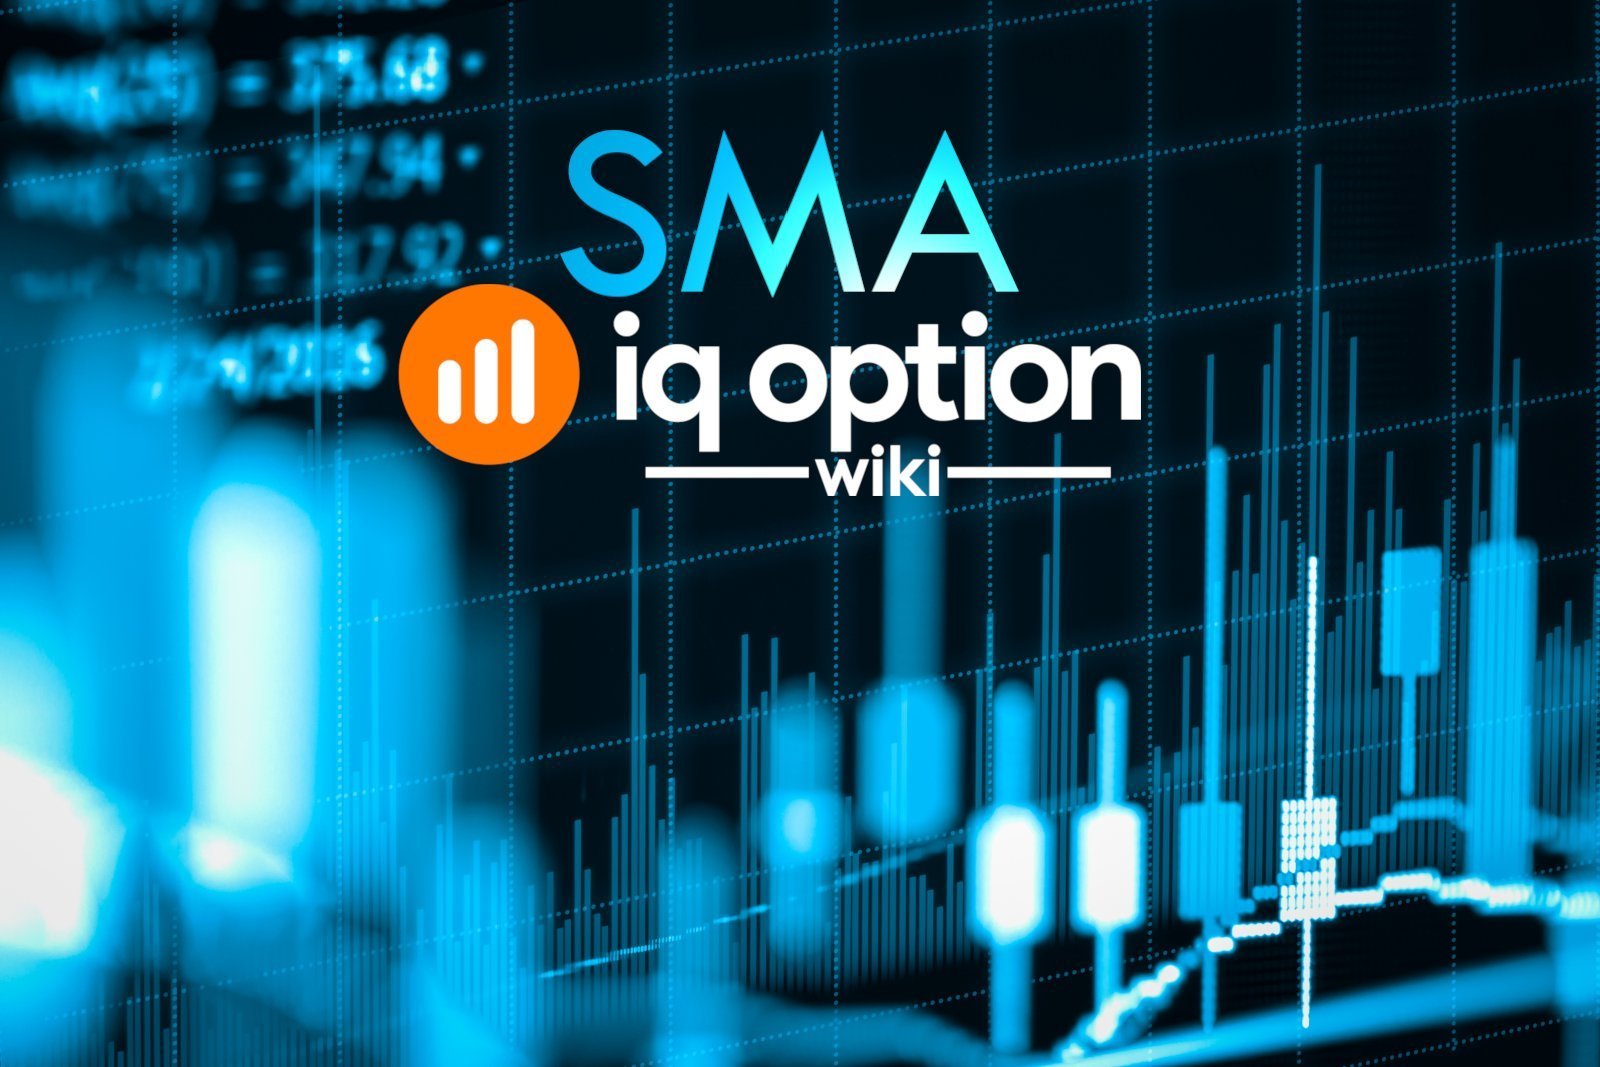 how to use sma indicator